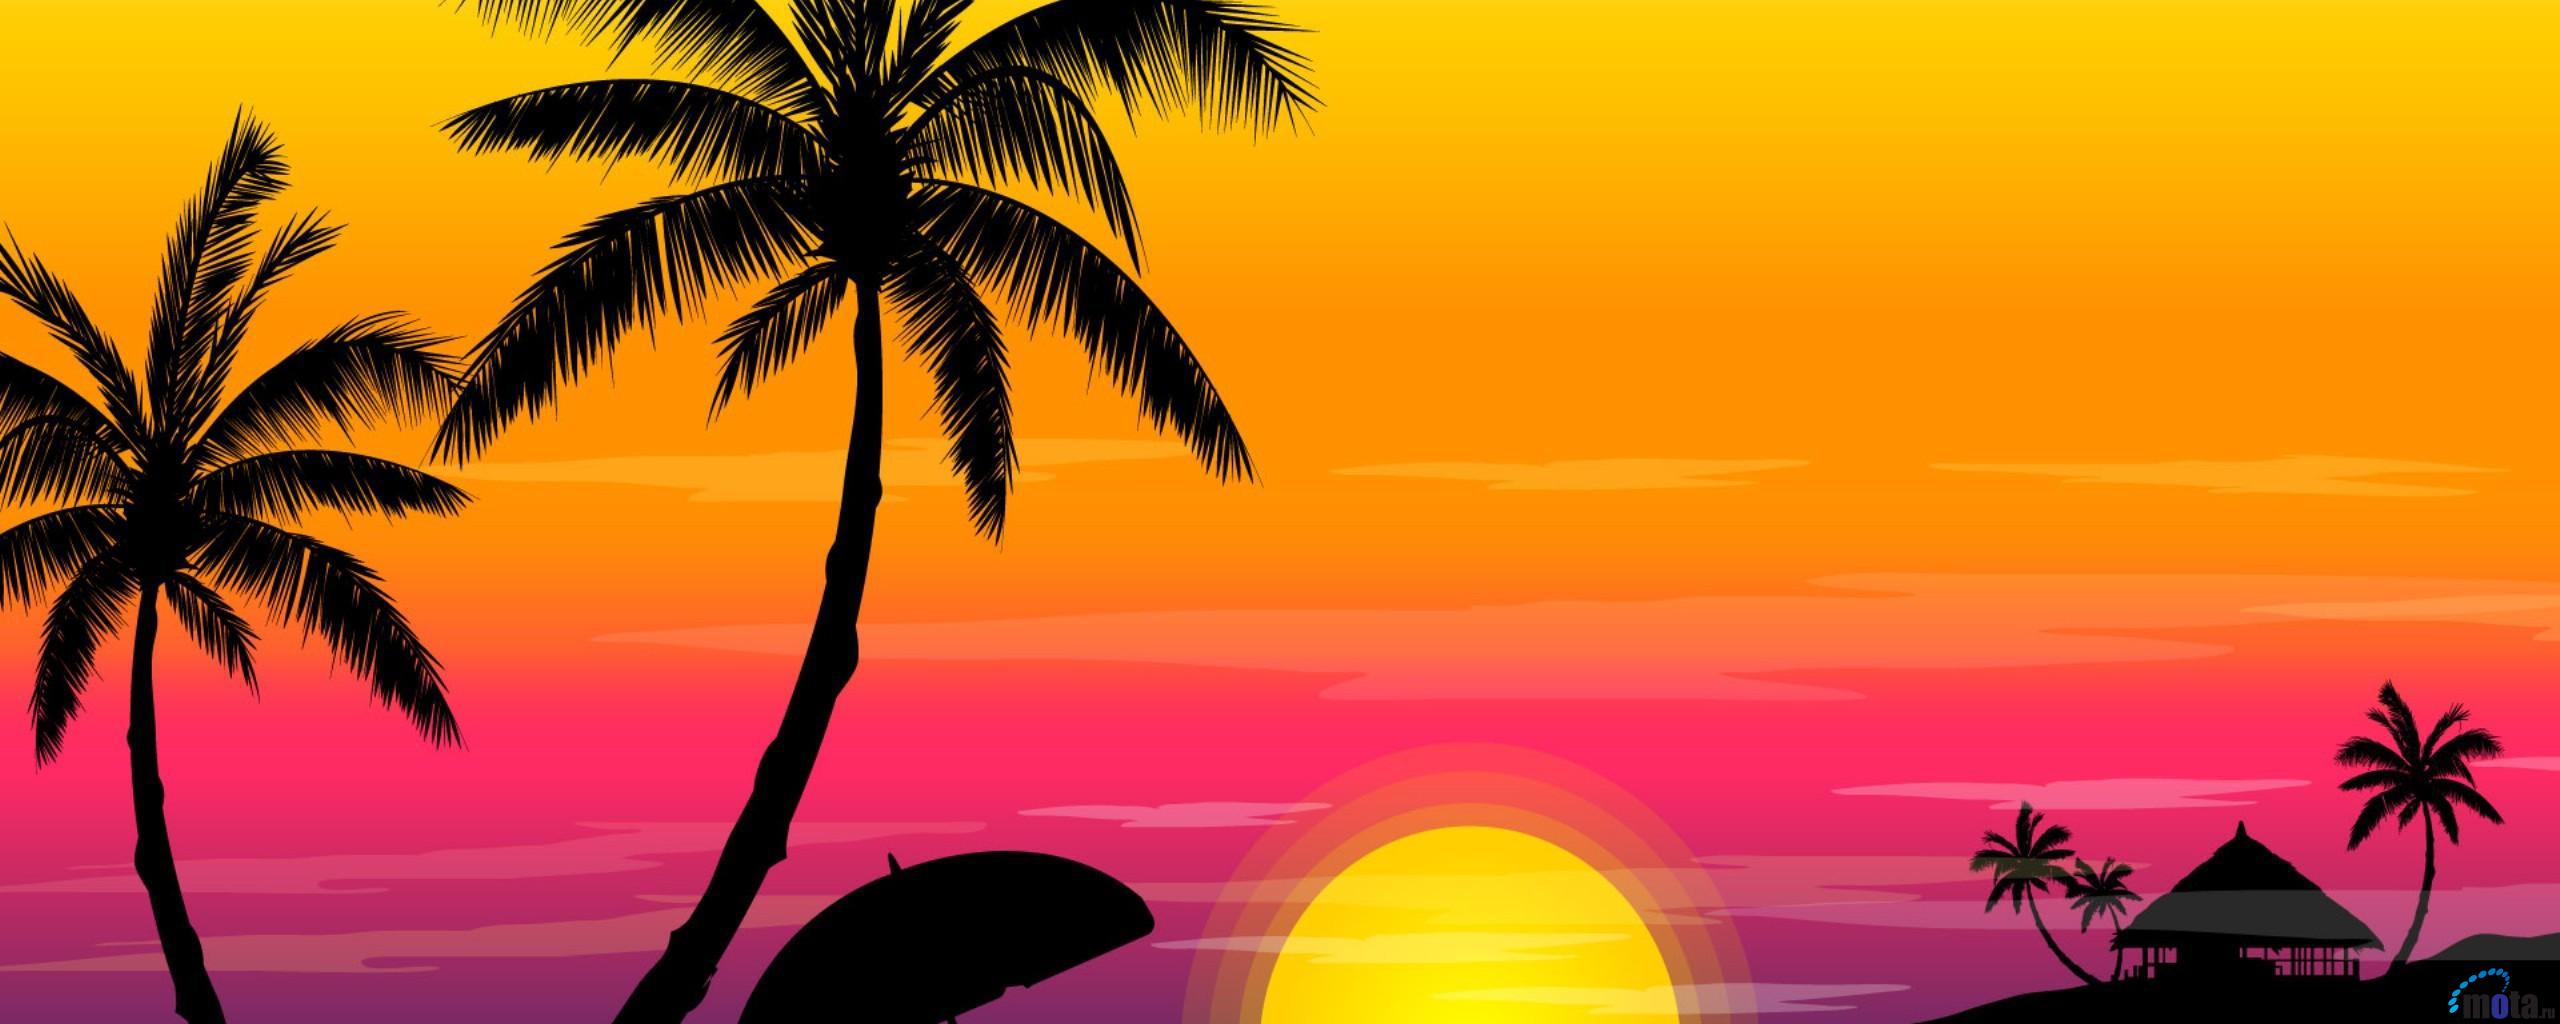 Tropical Sunset Desktop Wallpaper Desktop Wallpapers Sunset in